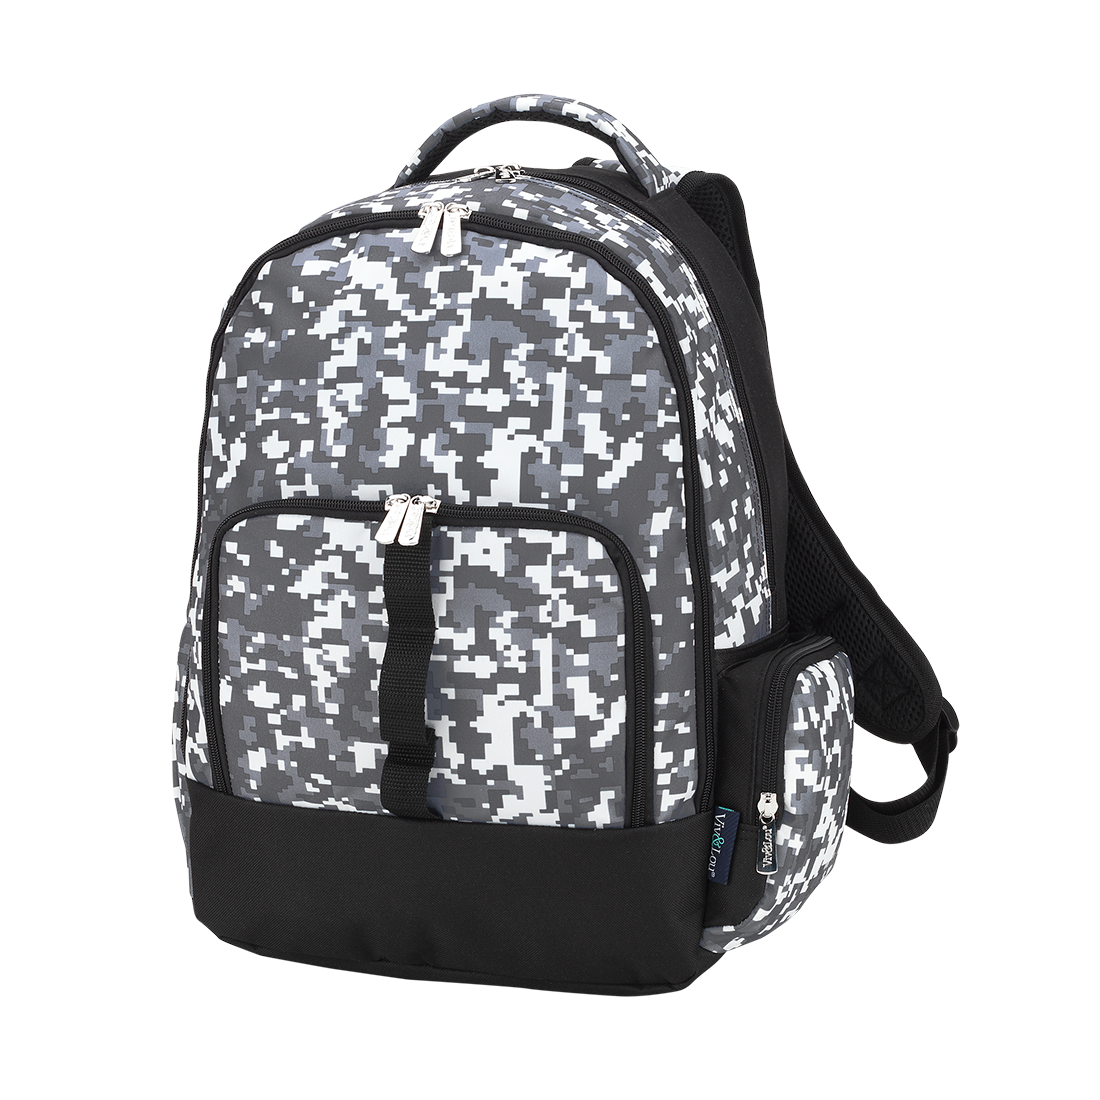 Techni-Cool Backpack